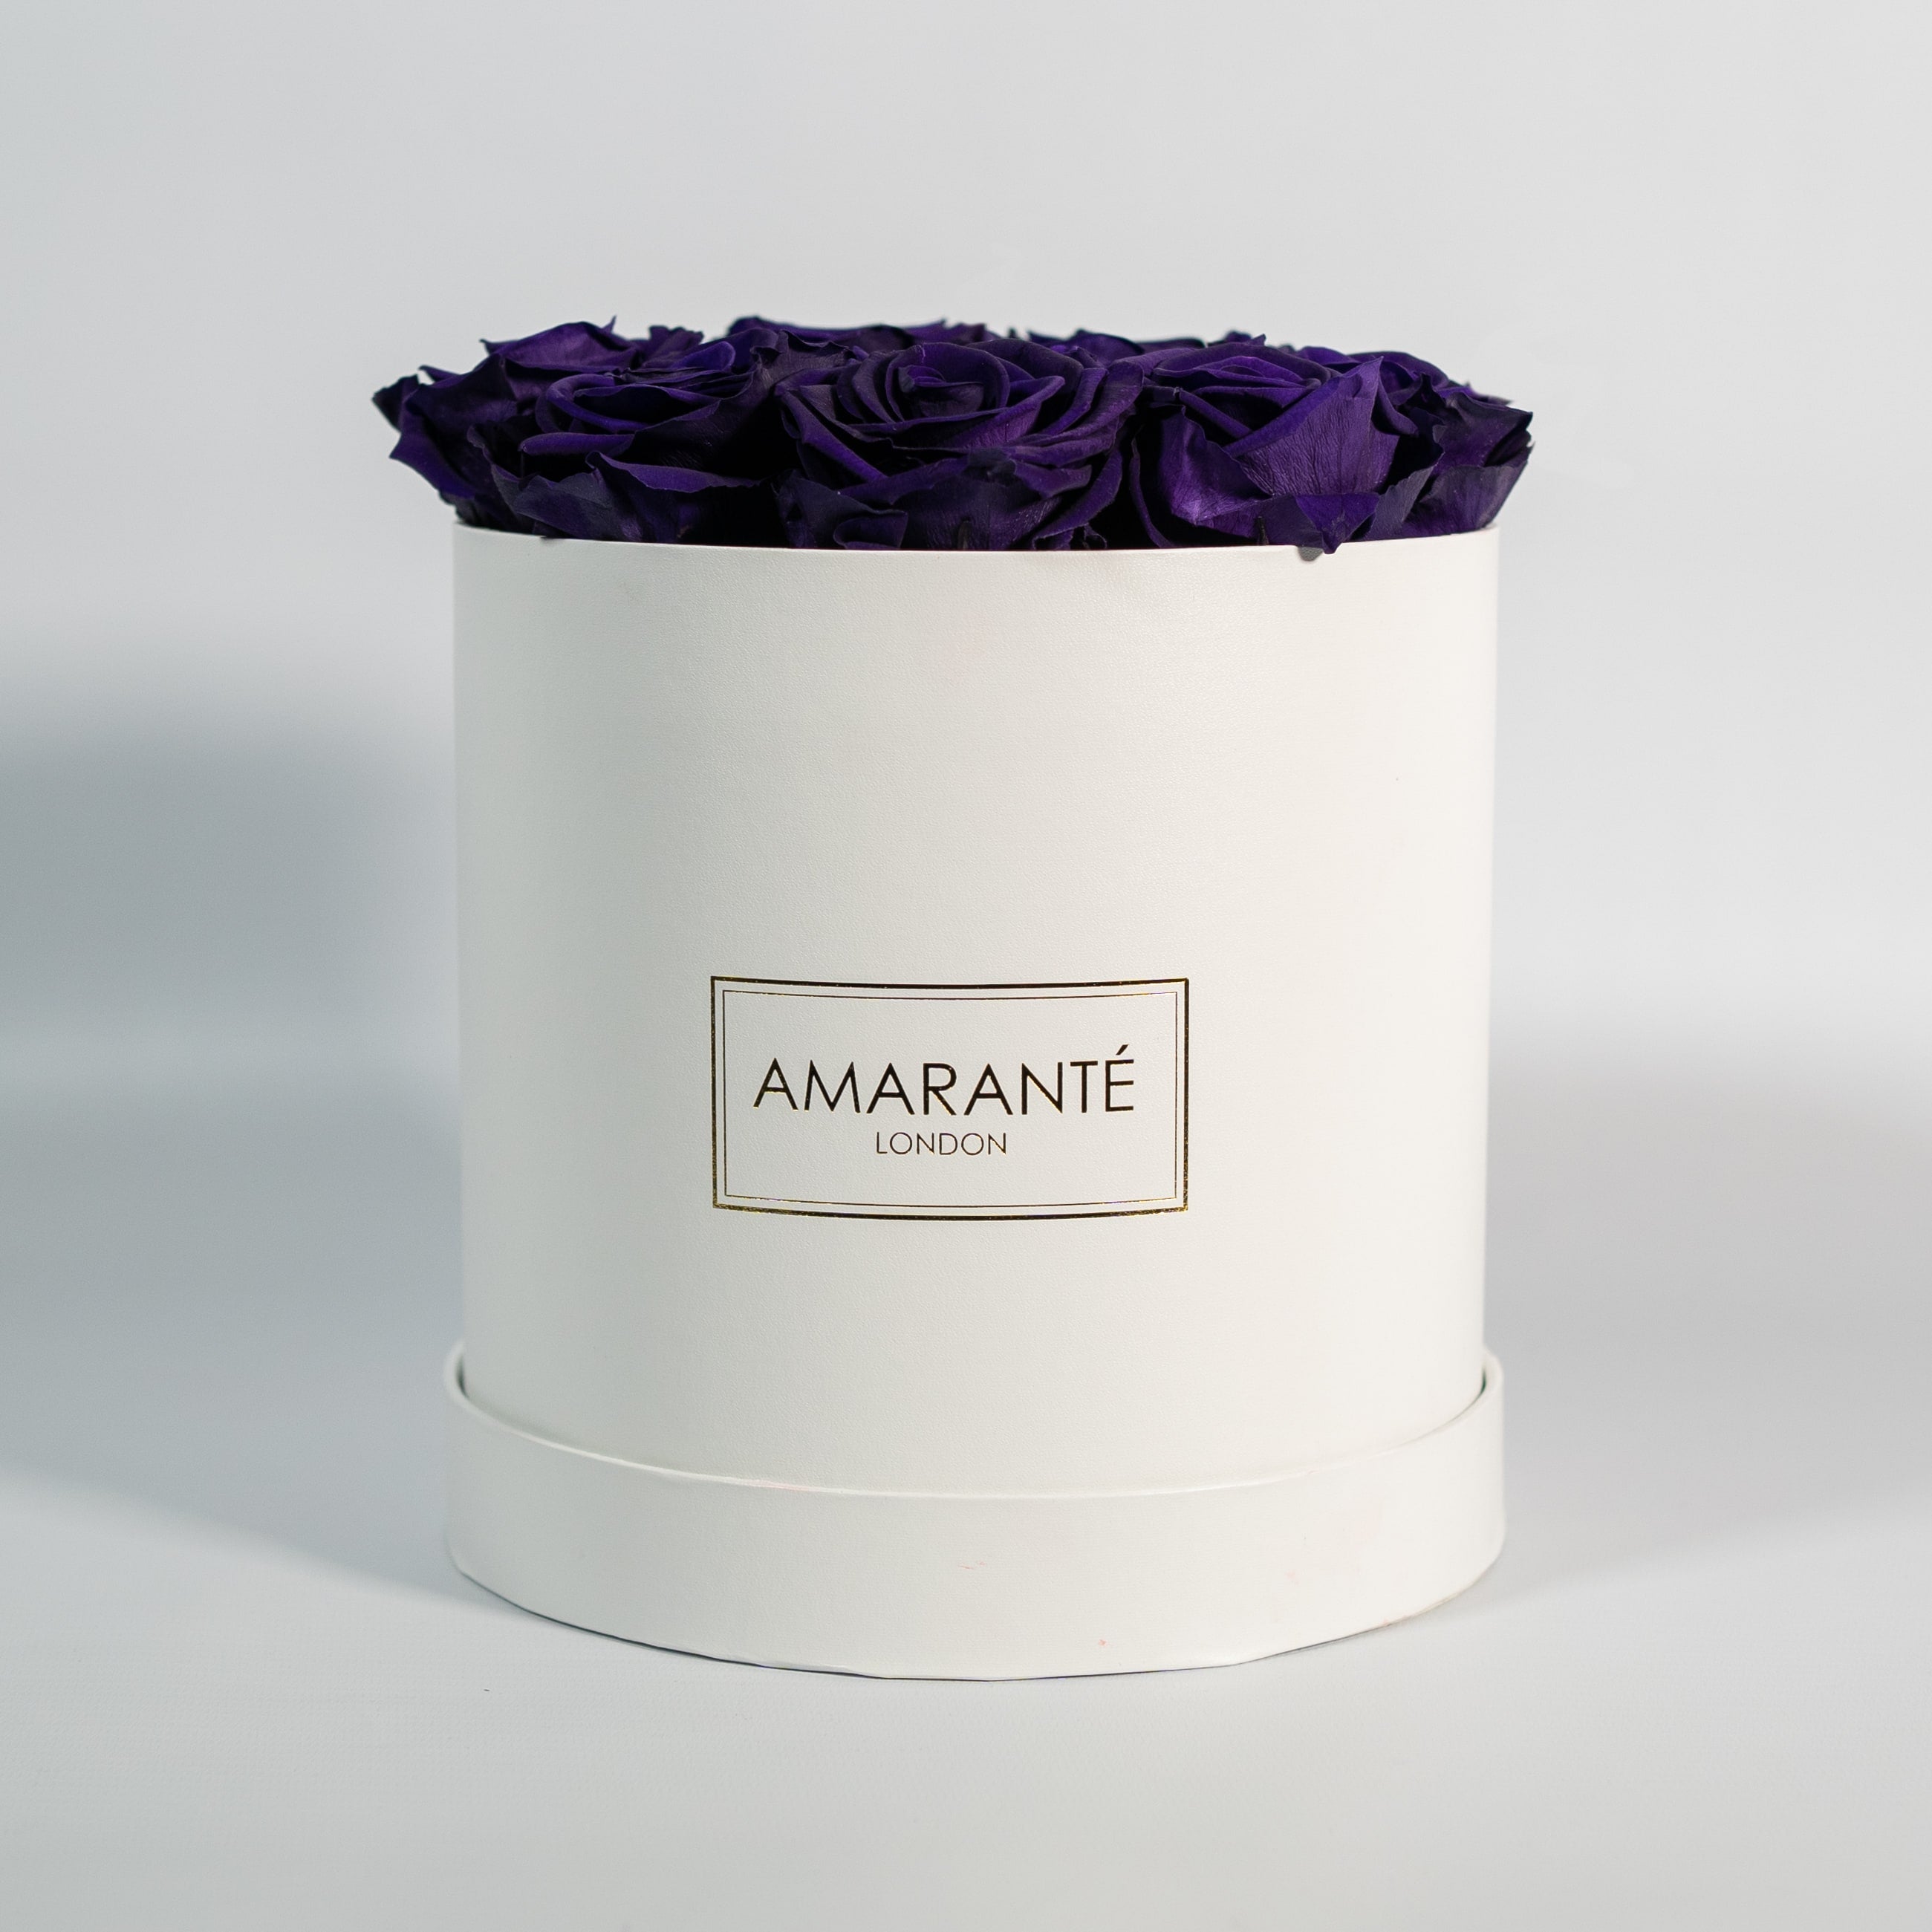 Aromatic dark purple roses denoting wisdom and creativity. 